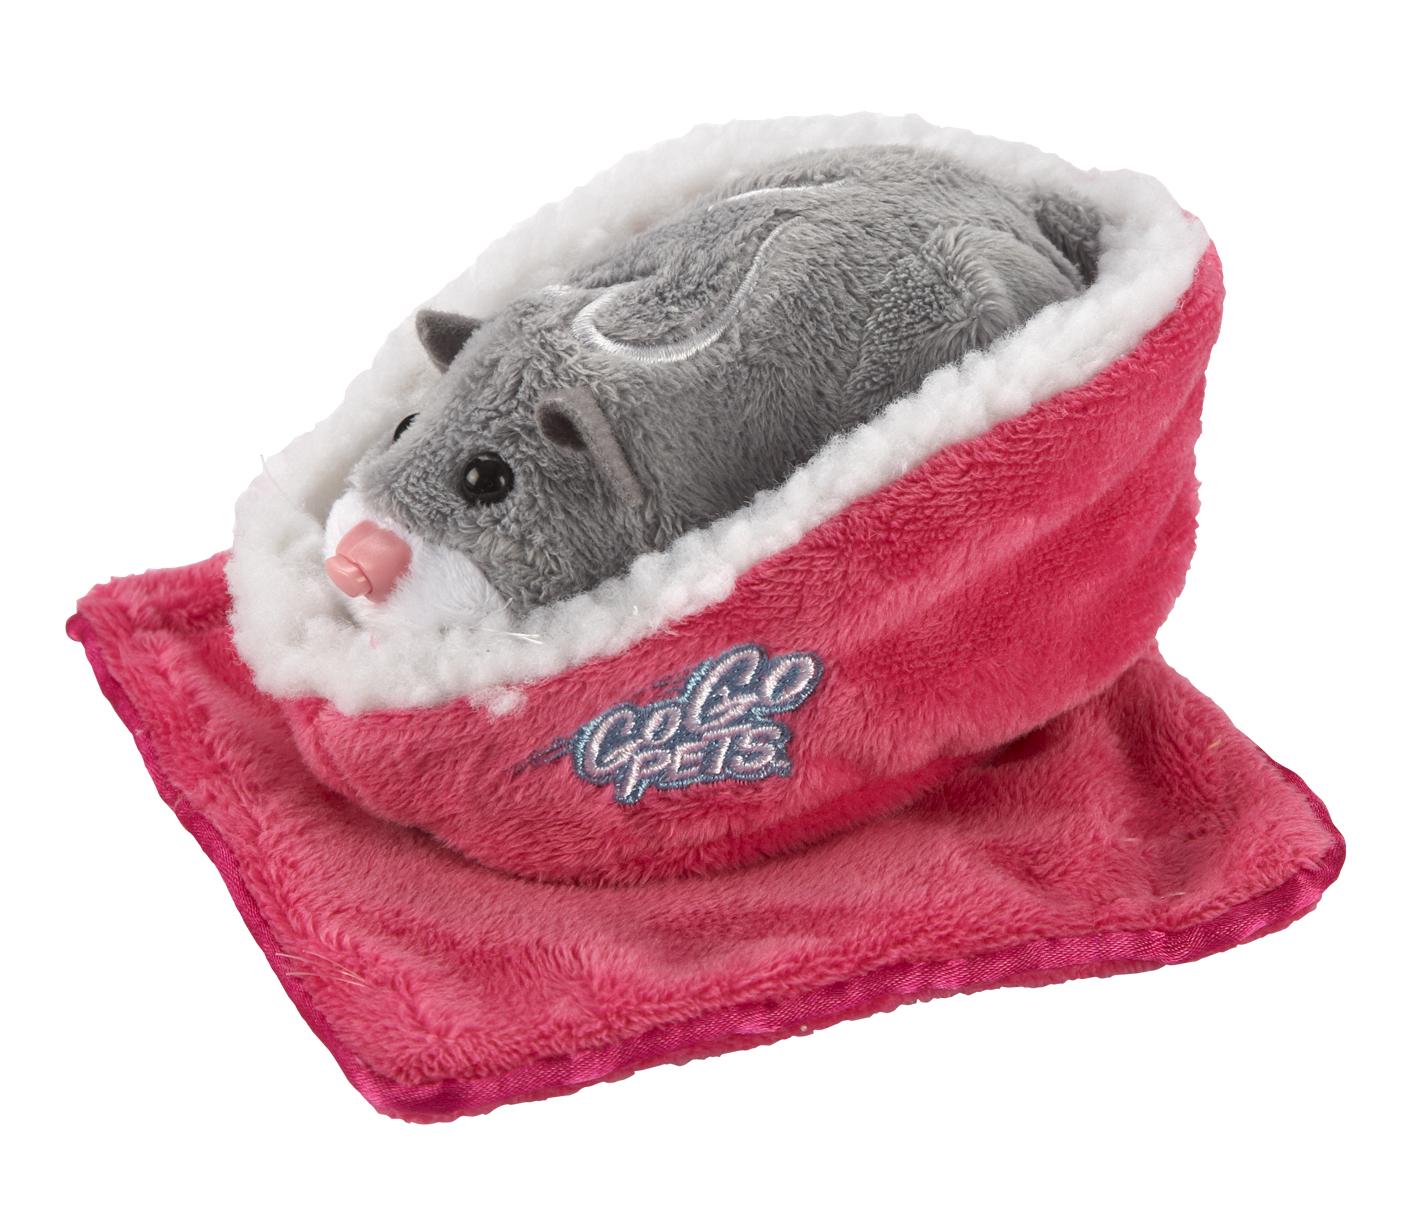 Unbranded Hamster Accessory Pack - Bed/blanket - Pink